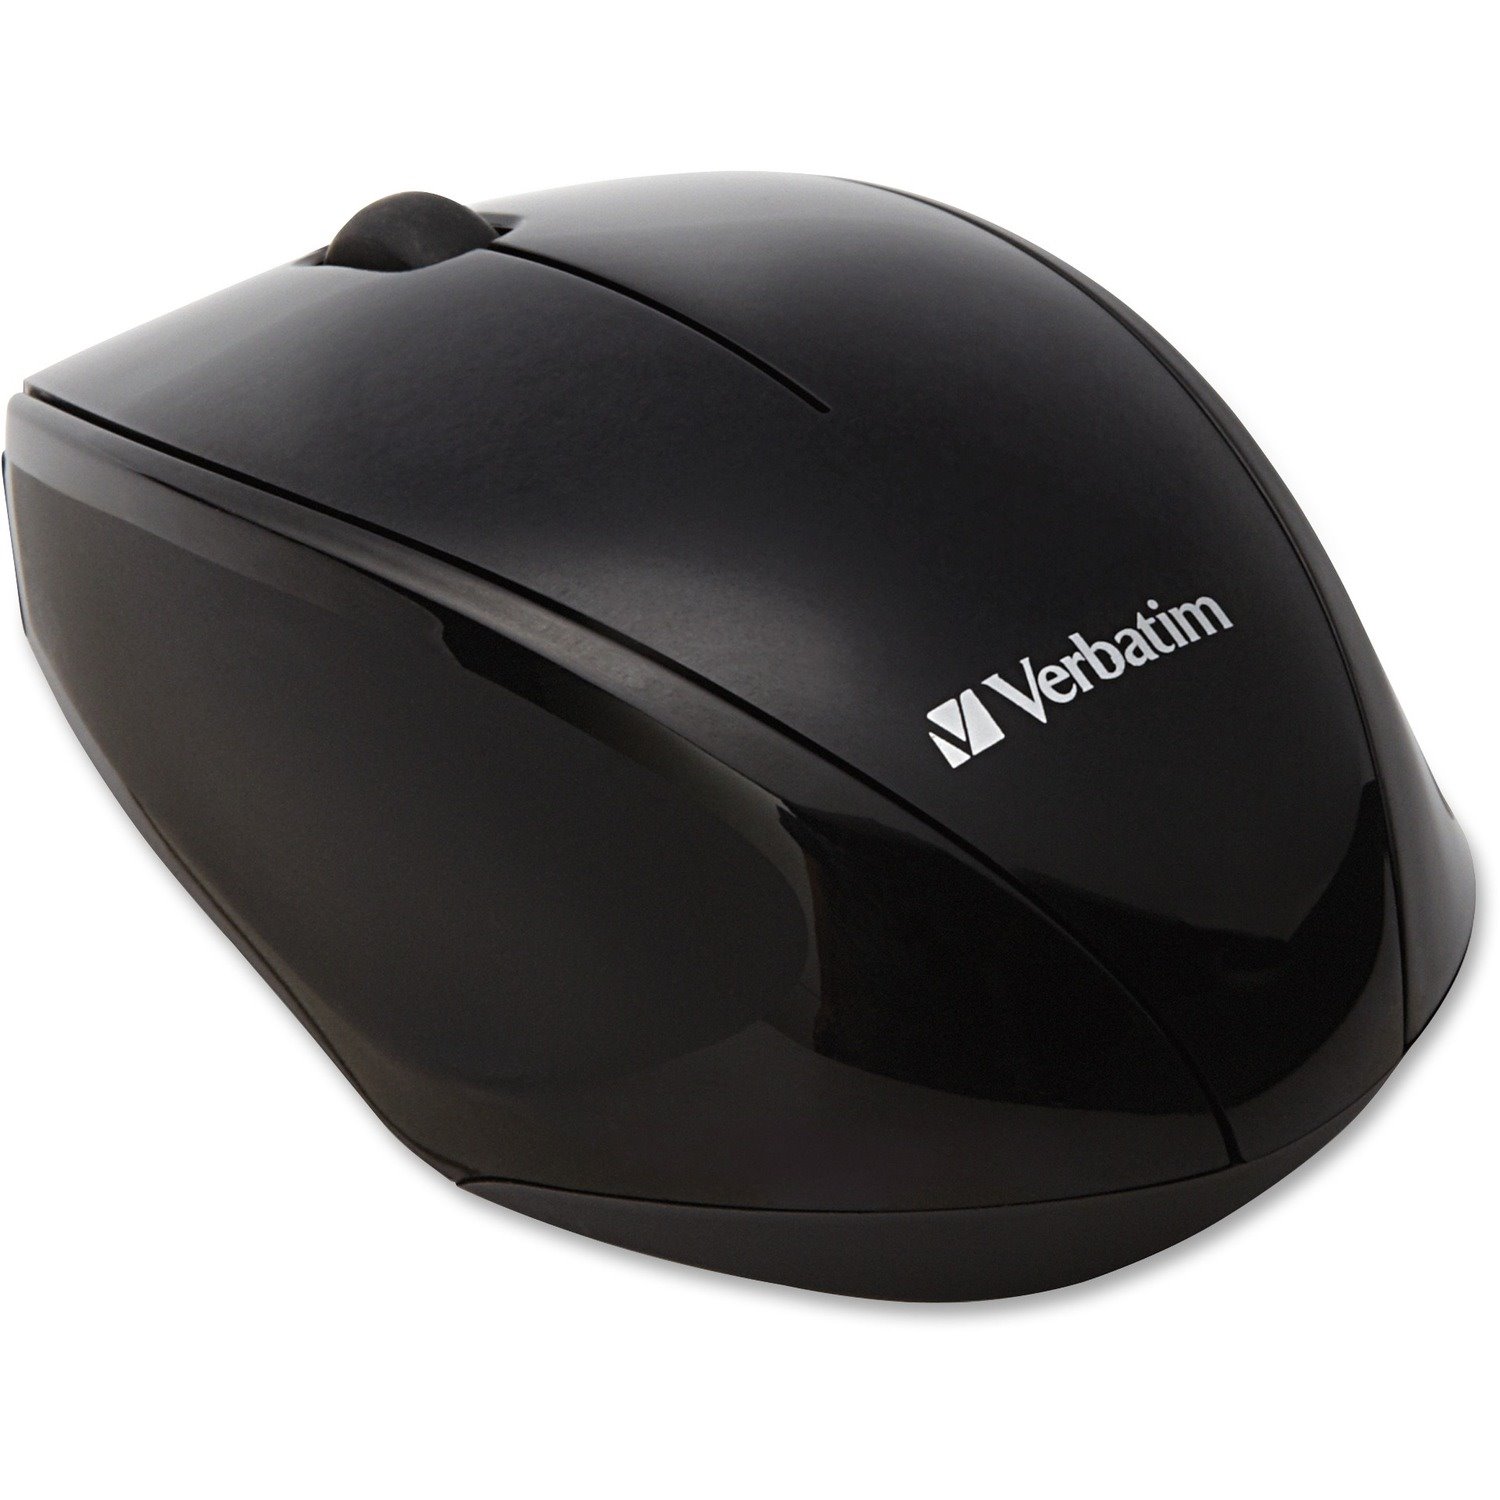 Verbatim Wireless Multi-trac LED Optical Mouse